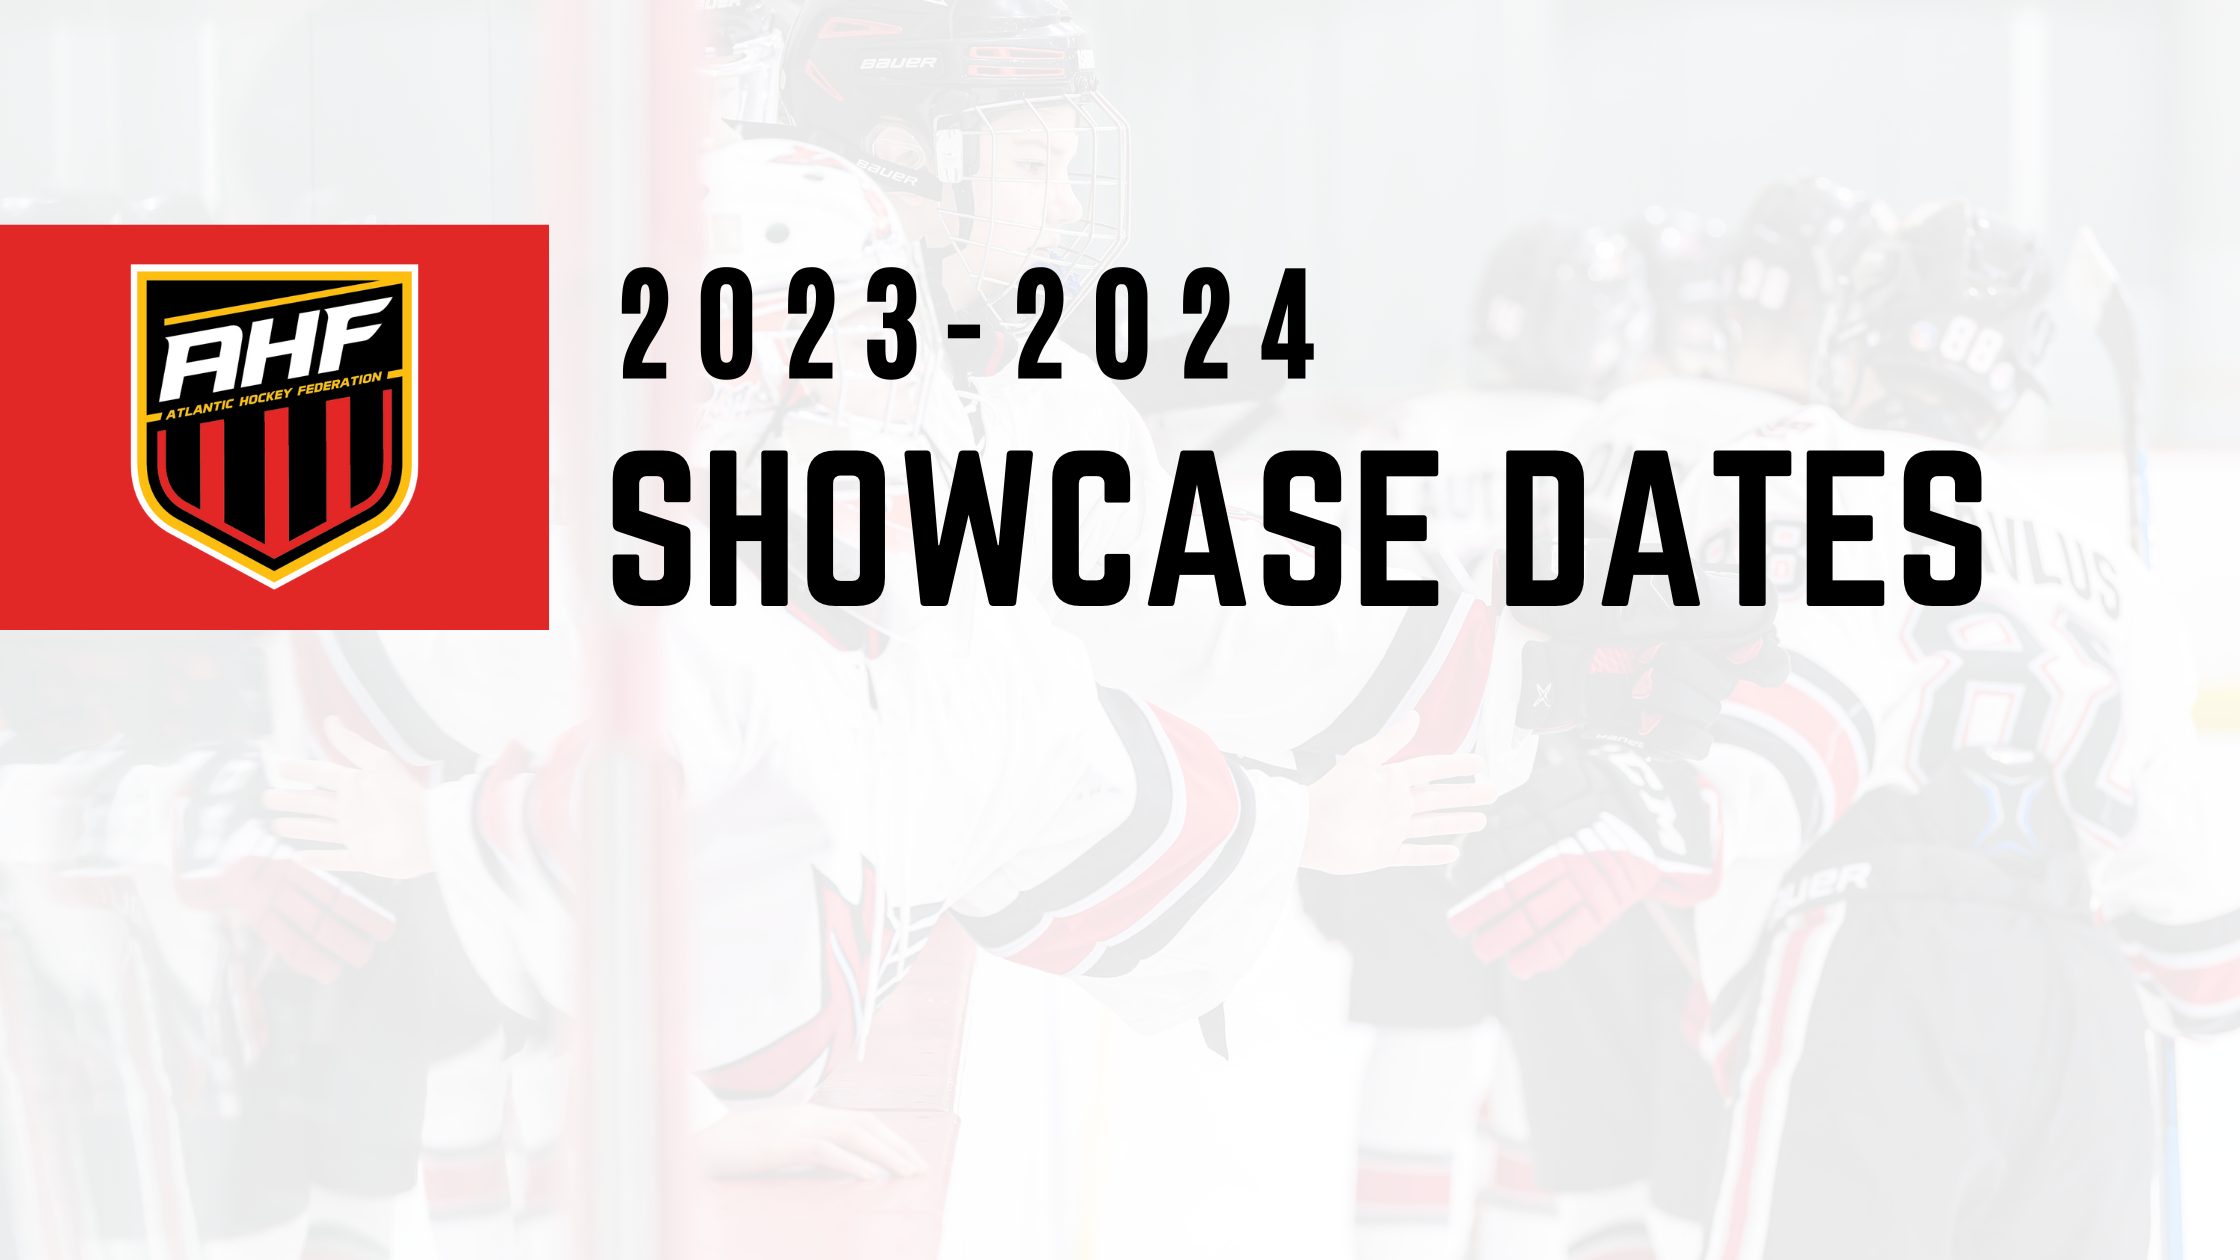 202324 Season Showcase Dates Atlantic Hockey Federation